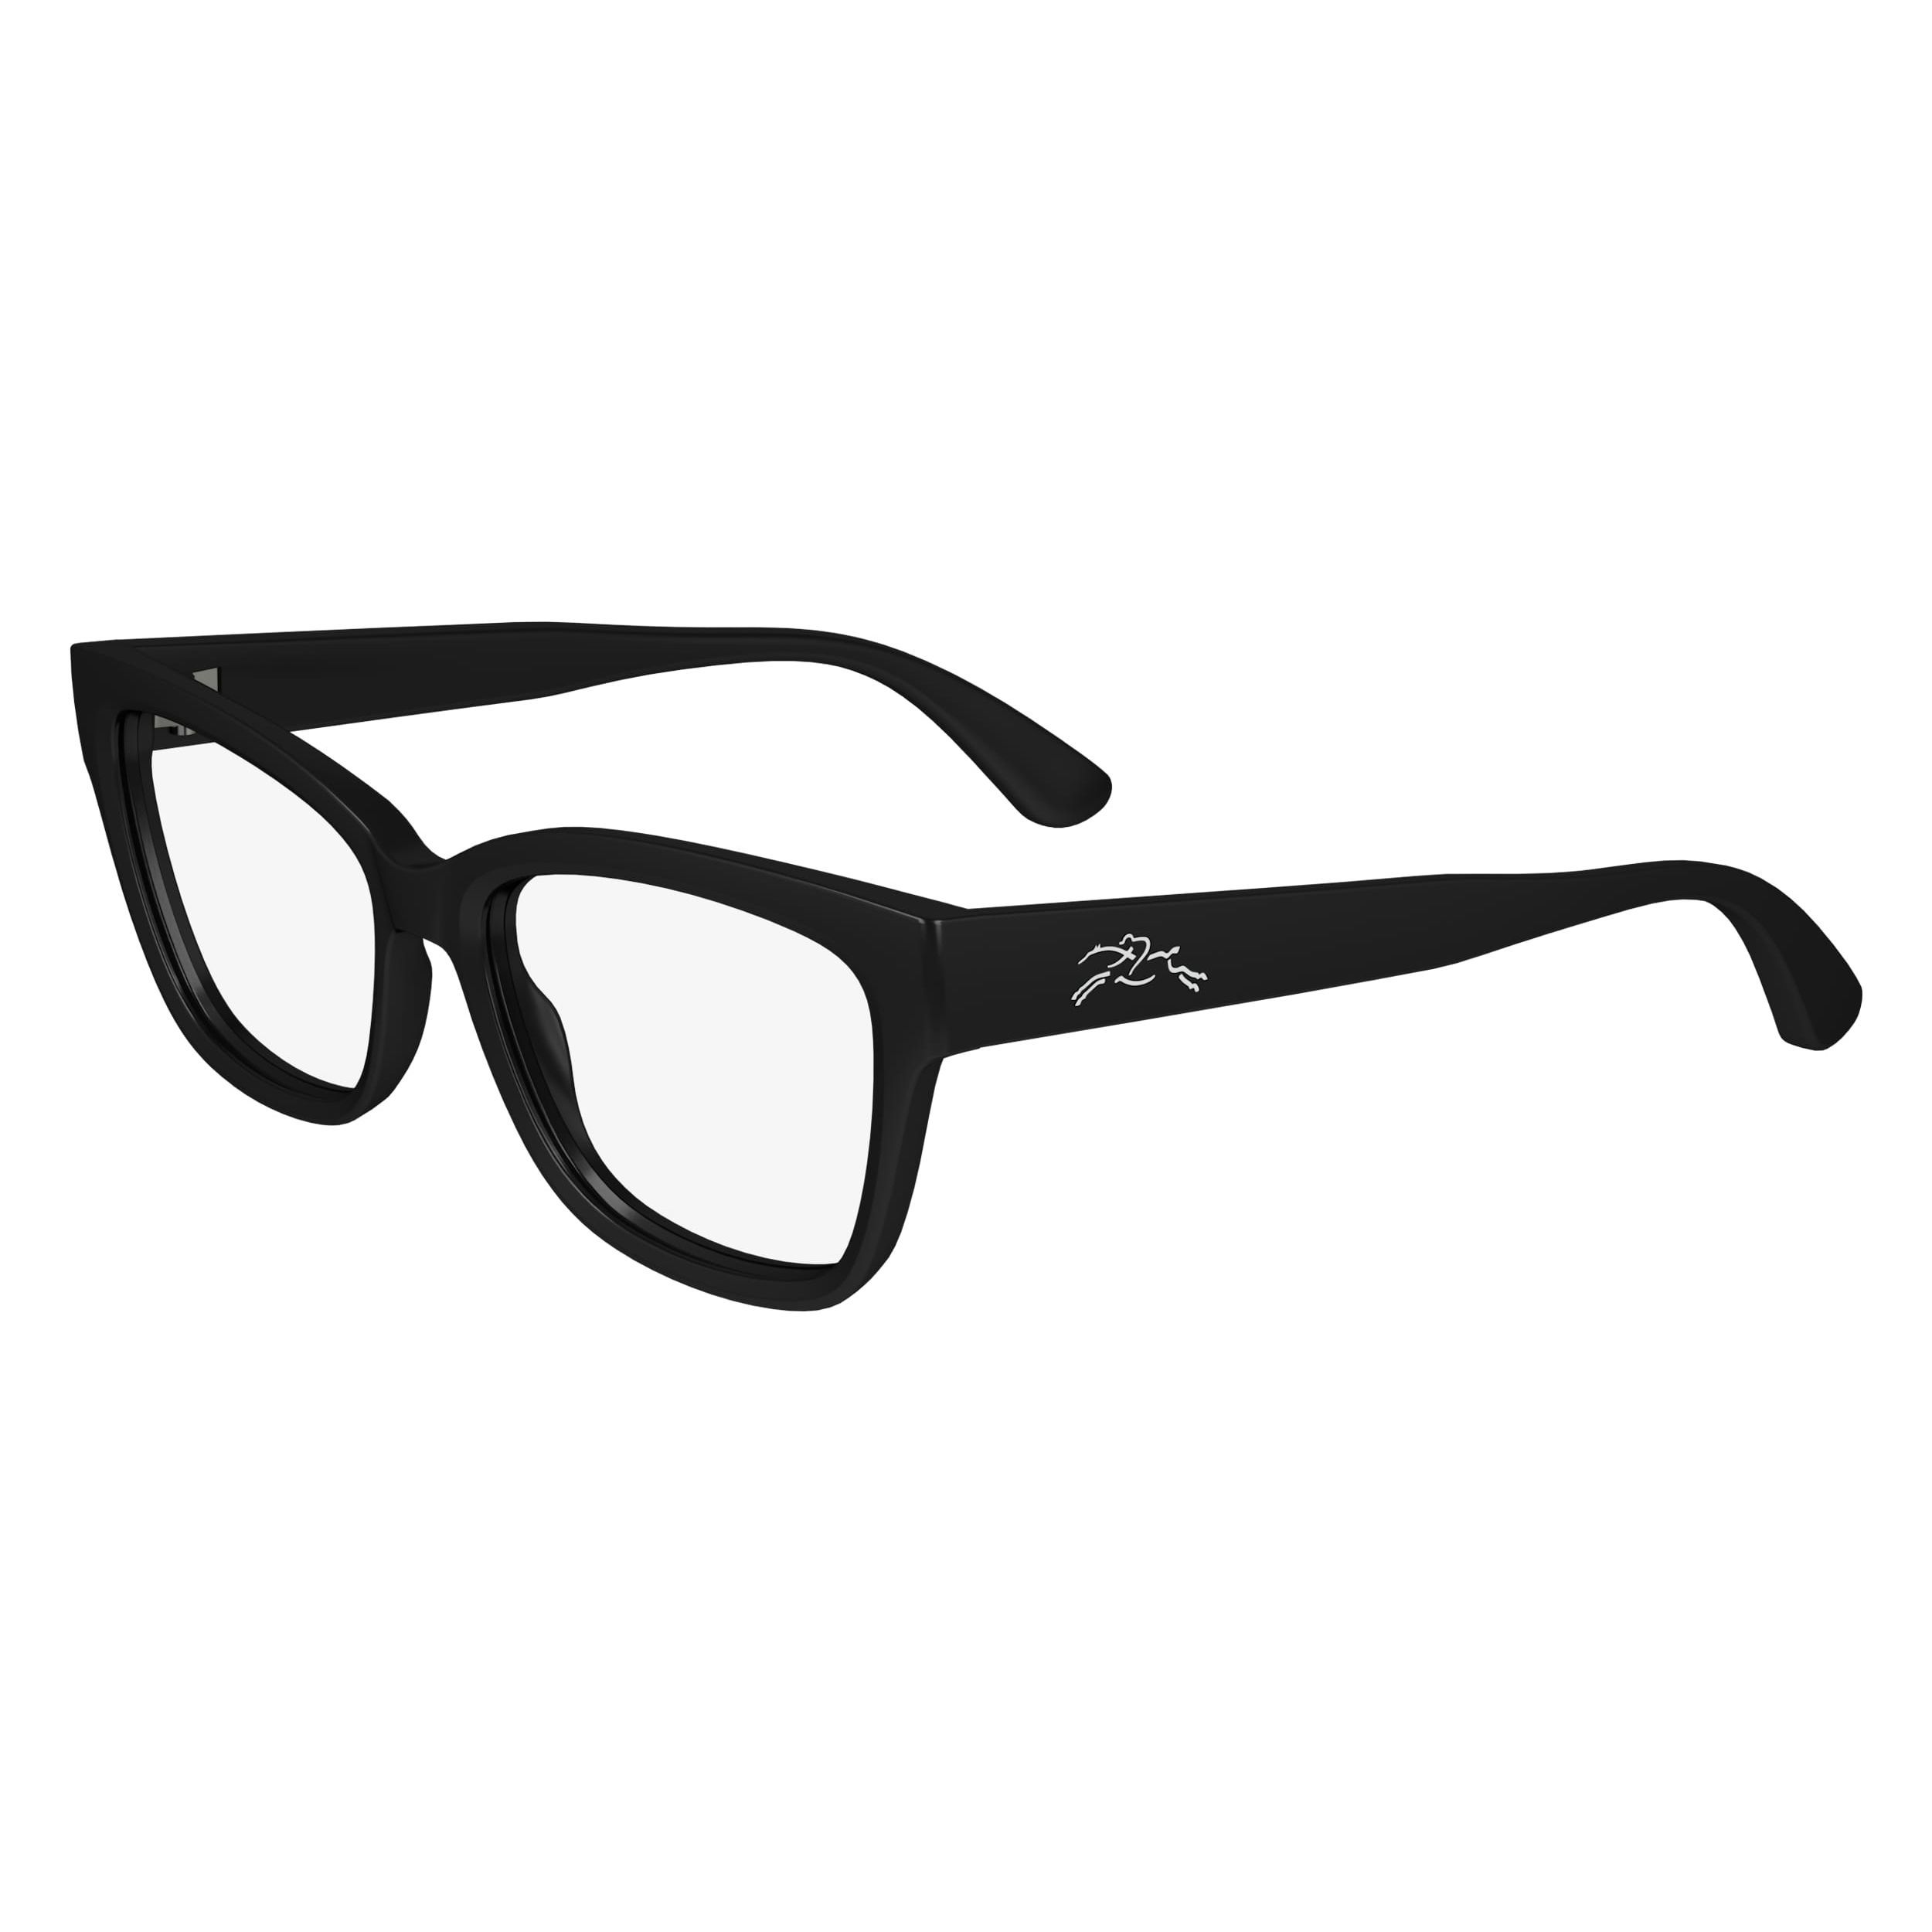 LO2738 Square Eyeglasses 001 - size 53